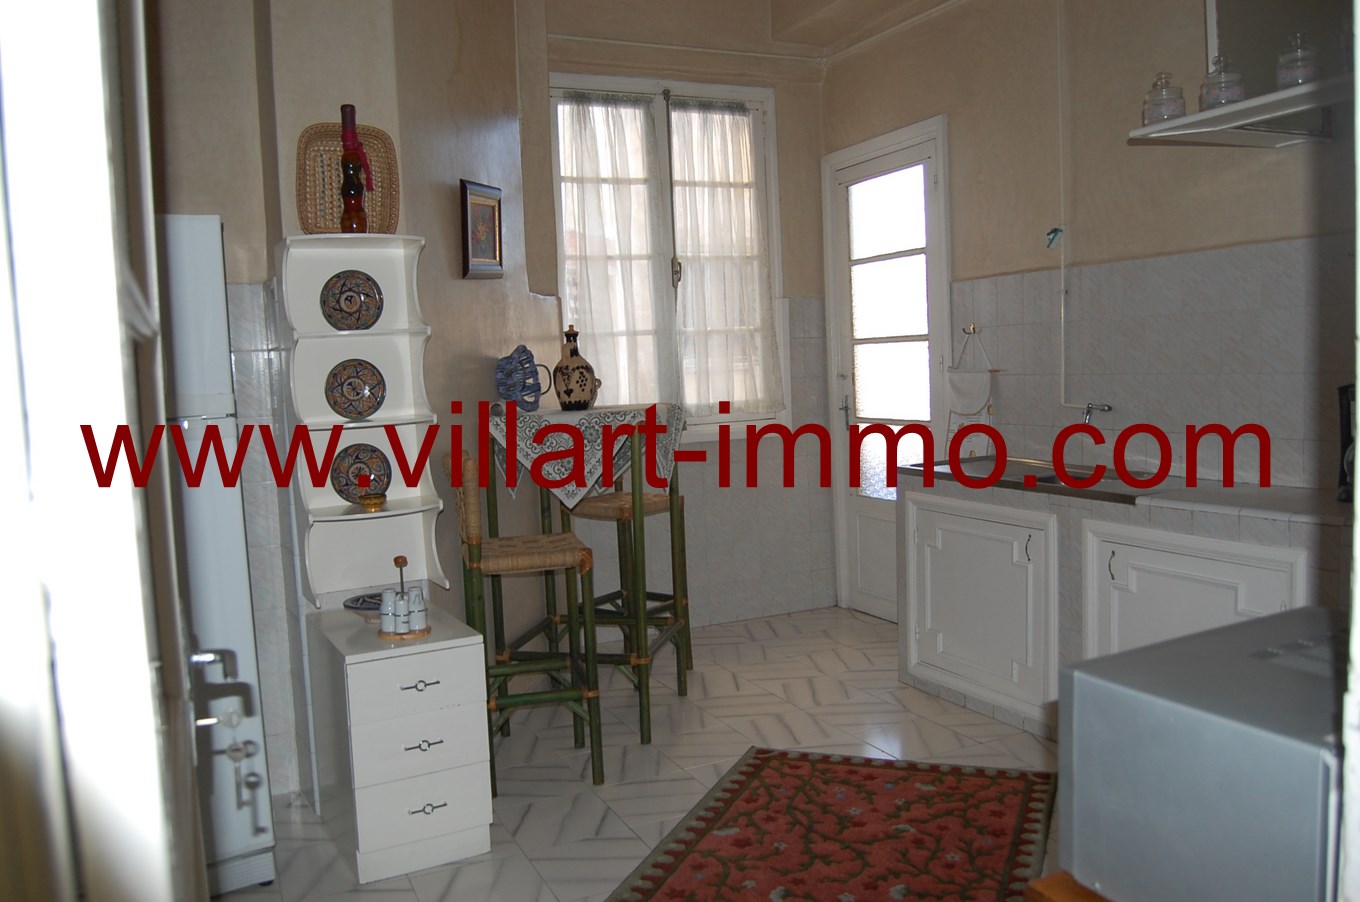 6-Location-Appartement-meublé-Tanger-cuisine -L673-Villart-immo